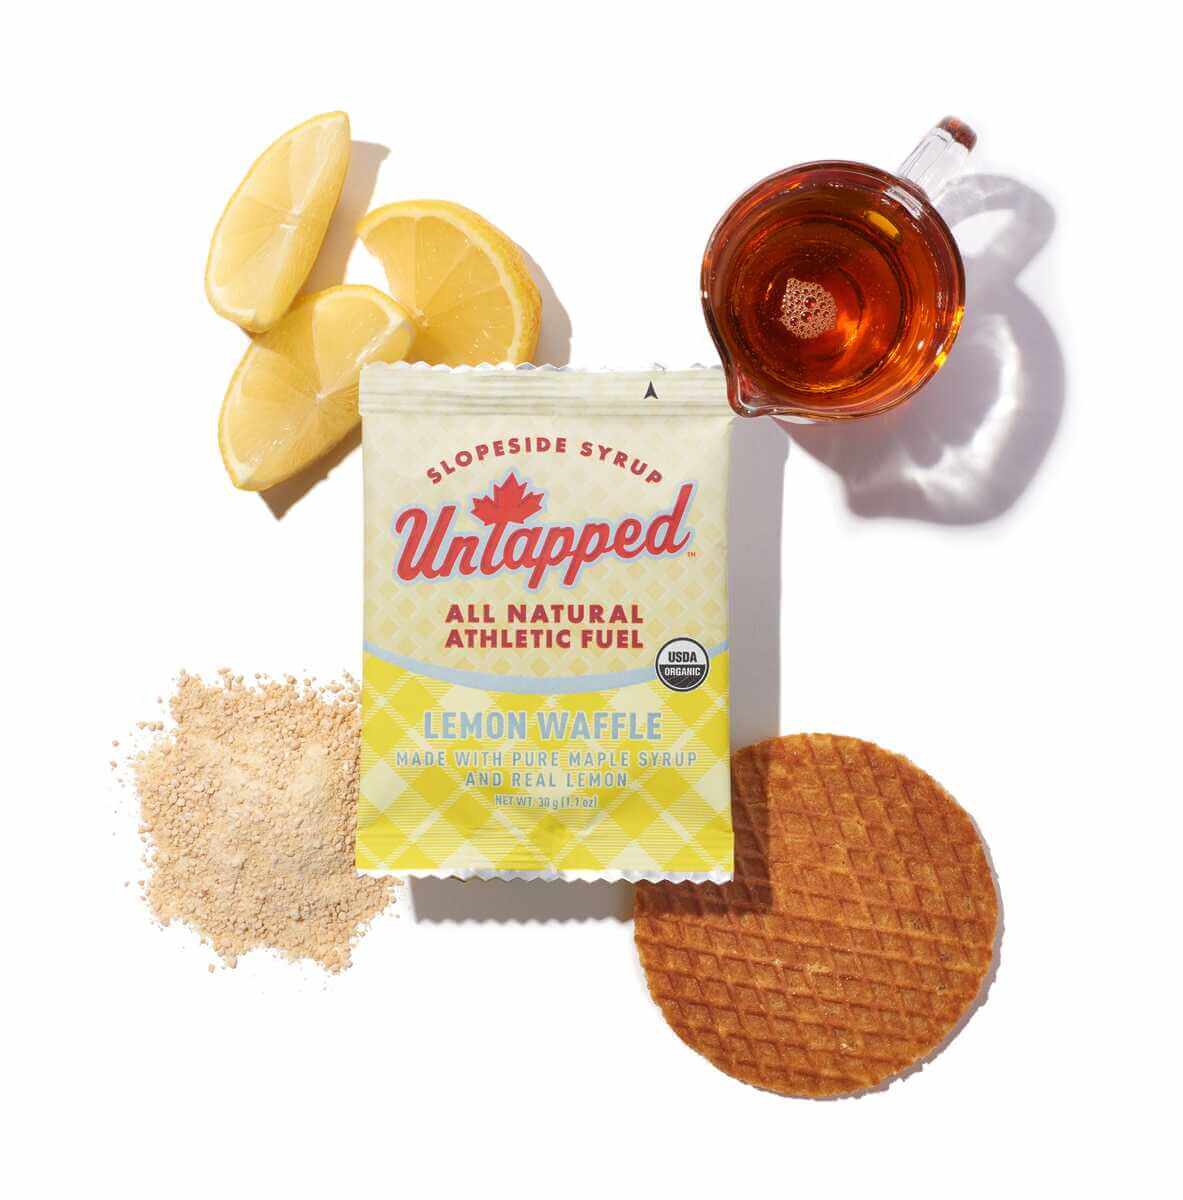 UnTapped - Waffle - Lemon - Box of 16